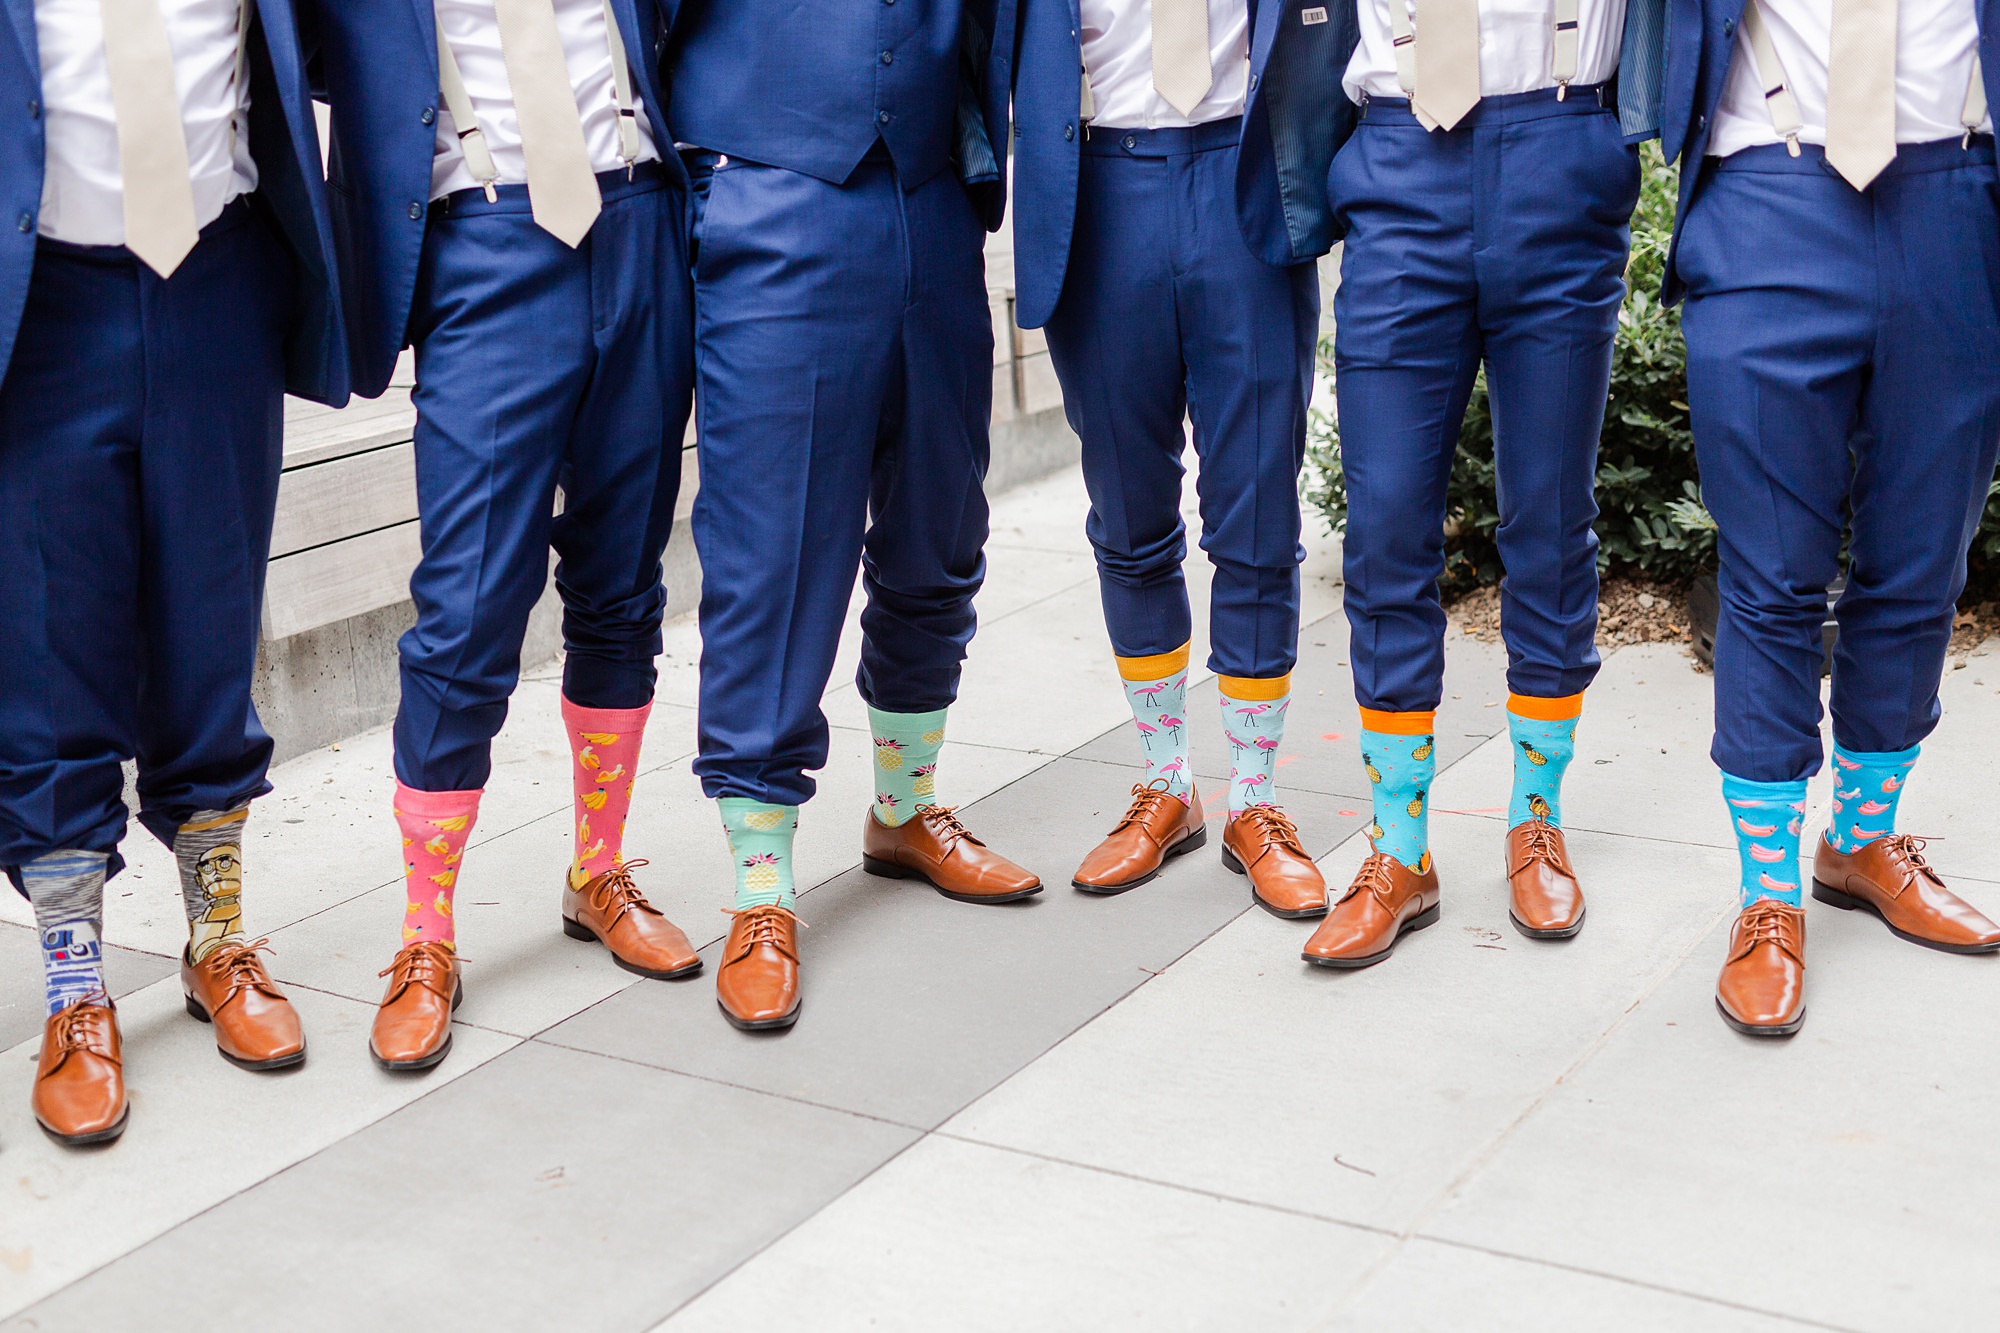 groomsmen show off funny socks on wedding day with pants tucked into socks